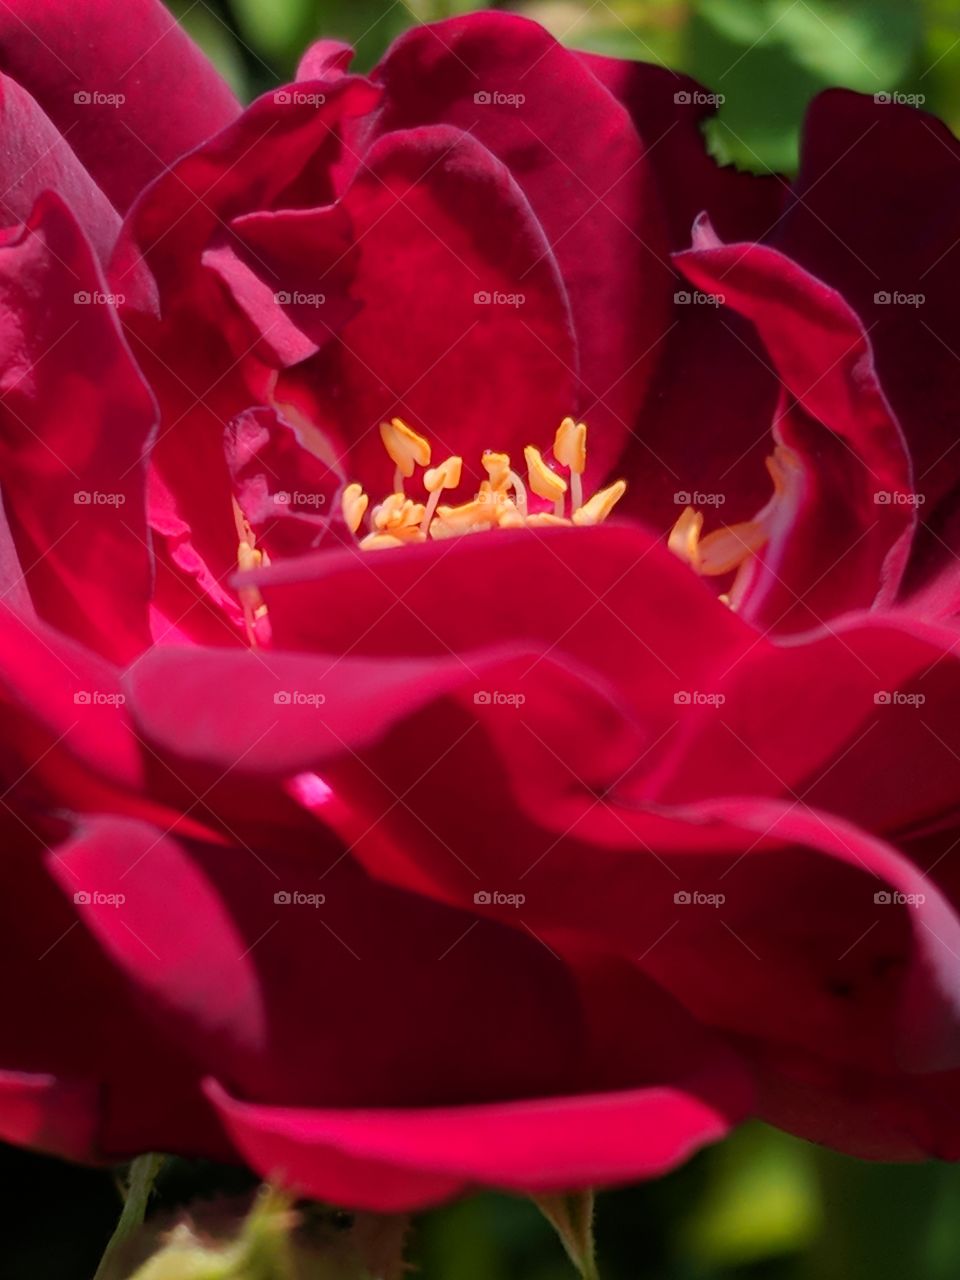 stunning rose close up